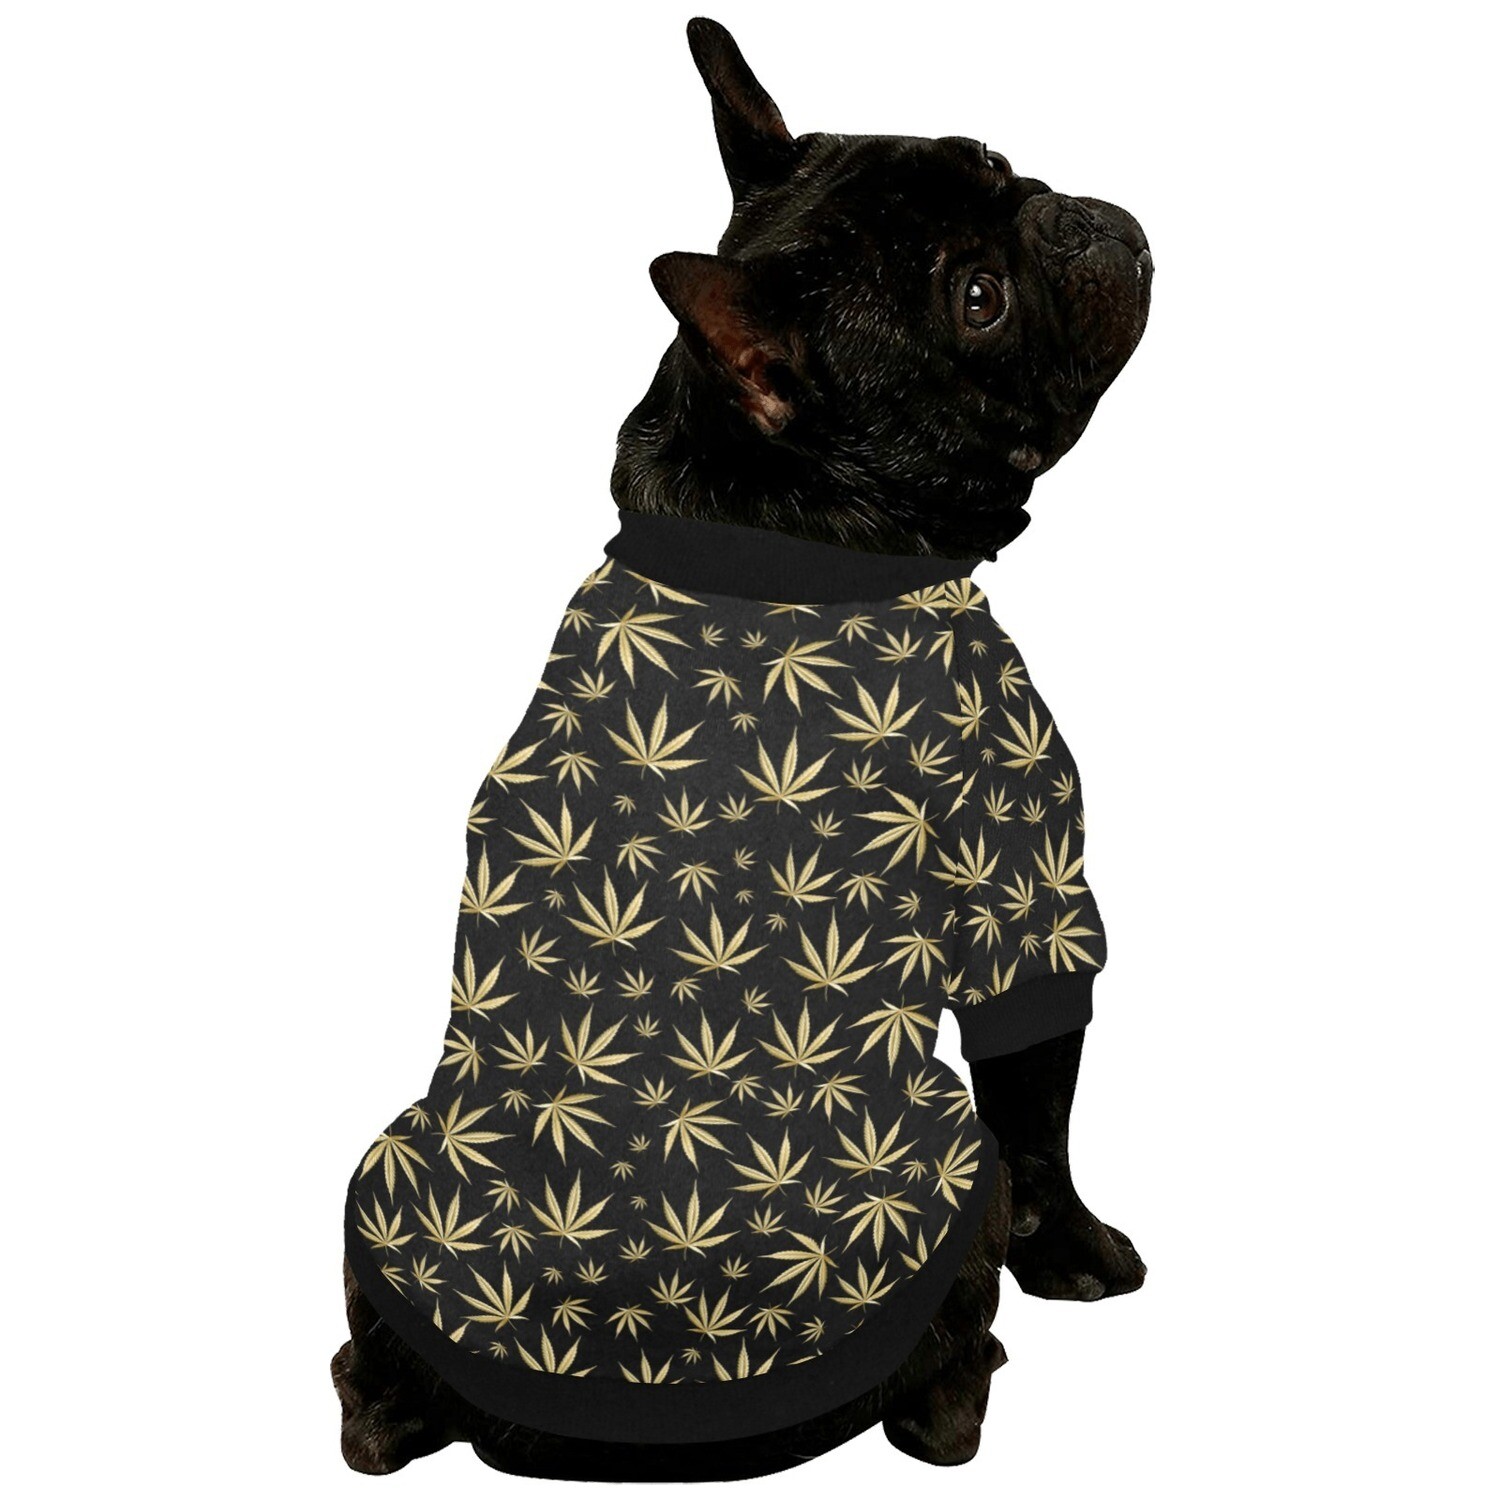 🐕 Dog Sweatshirt, fuzzy warm buttoned dog Sweater, Dog clothes, Dog clothing, 6 sizes XS to 2XL, Gift for dogs, Marijuana, cannabis, weed, leaves, rasta, gold